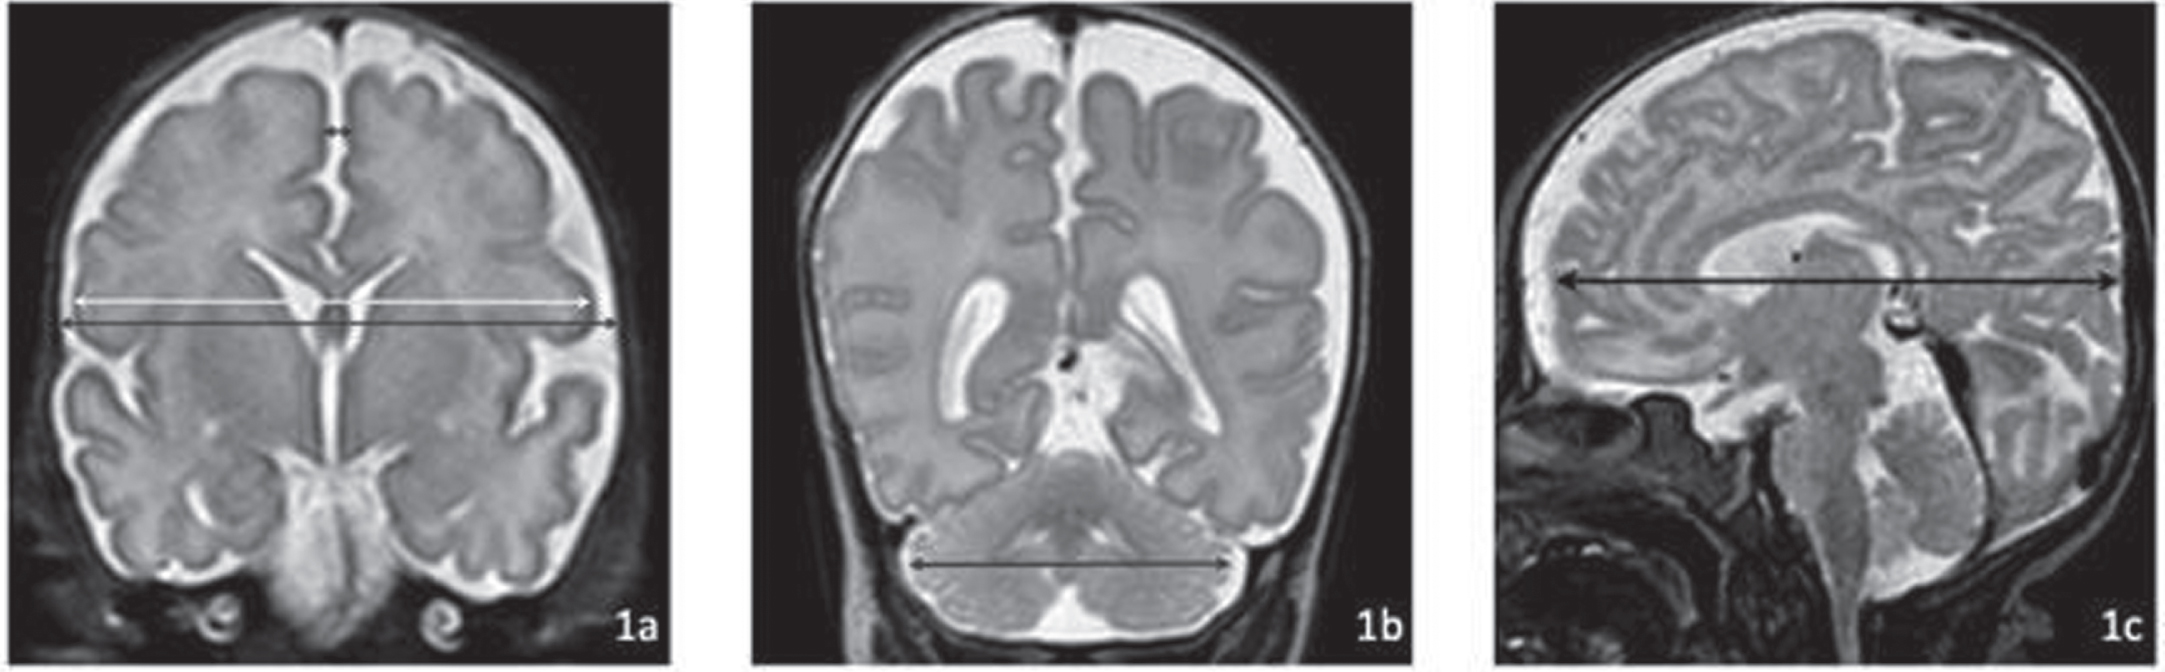 Measurements of (a) cerebral biparietal width (cBPW, light grey), bone biparietal width (bBPW, dark grey), interhemispheric distance (IHD, black); (b) transverse cerebellar diameter (tCD, black) and (c) fronto-occipital diameter (FOD, black).